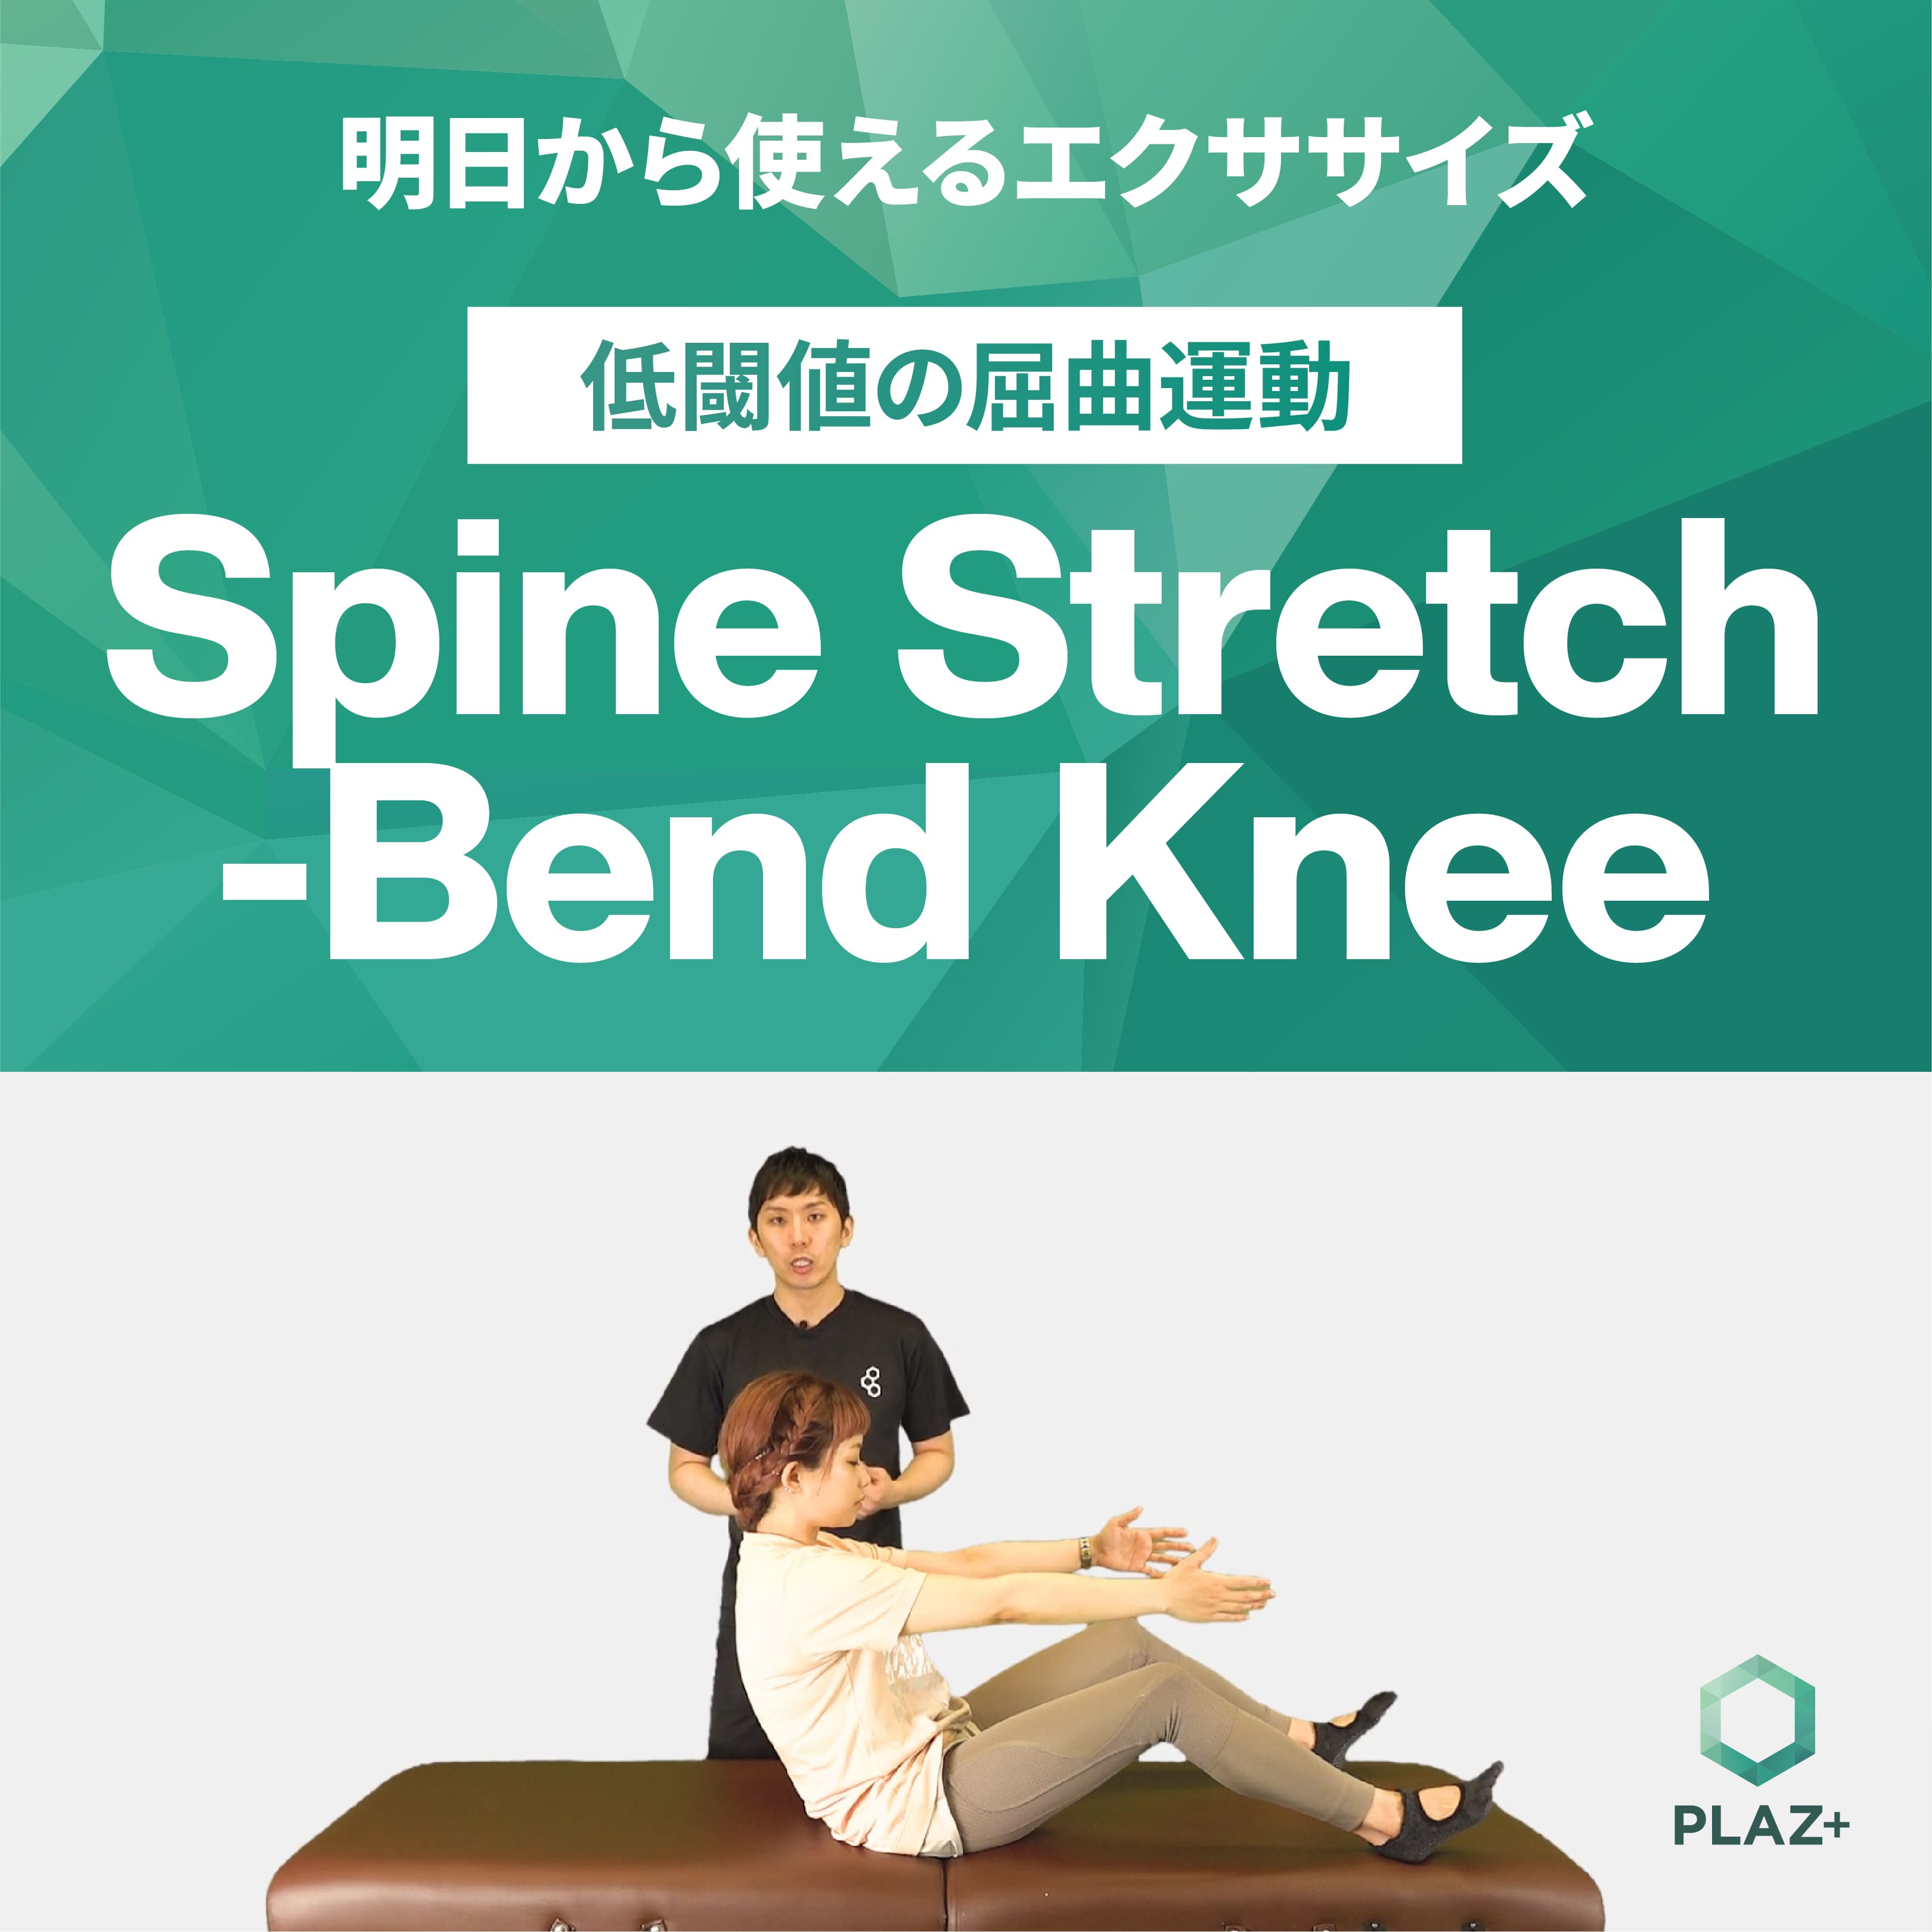 Spine Stretch-Bend Knee